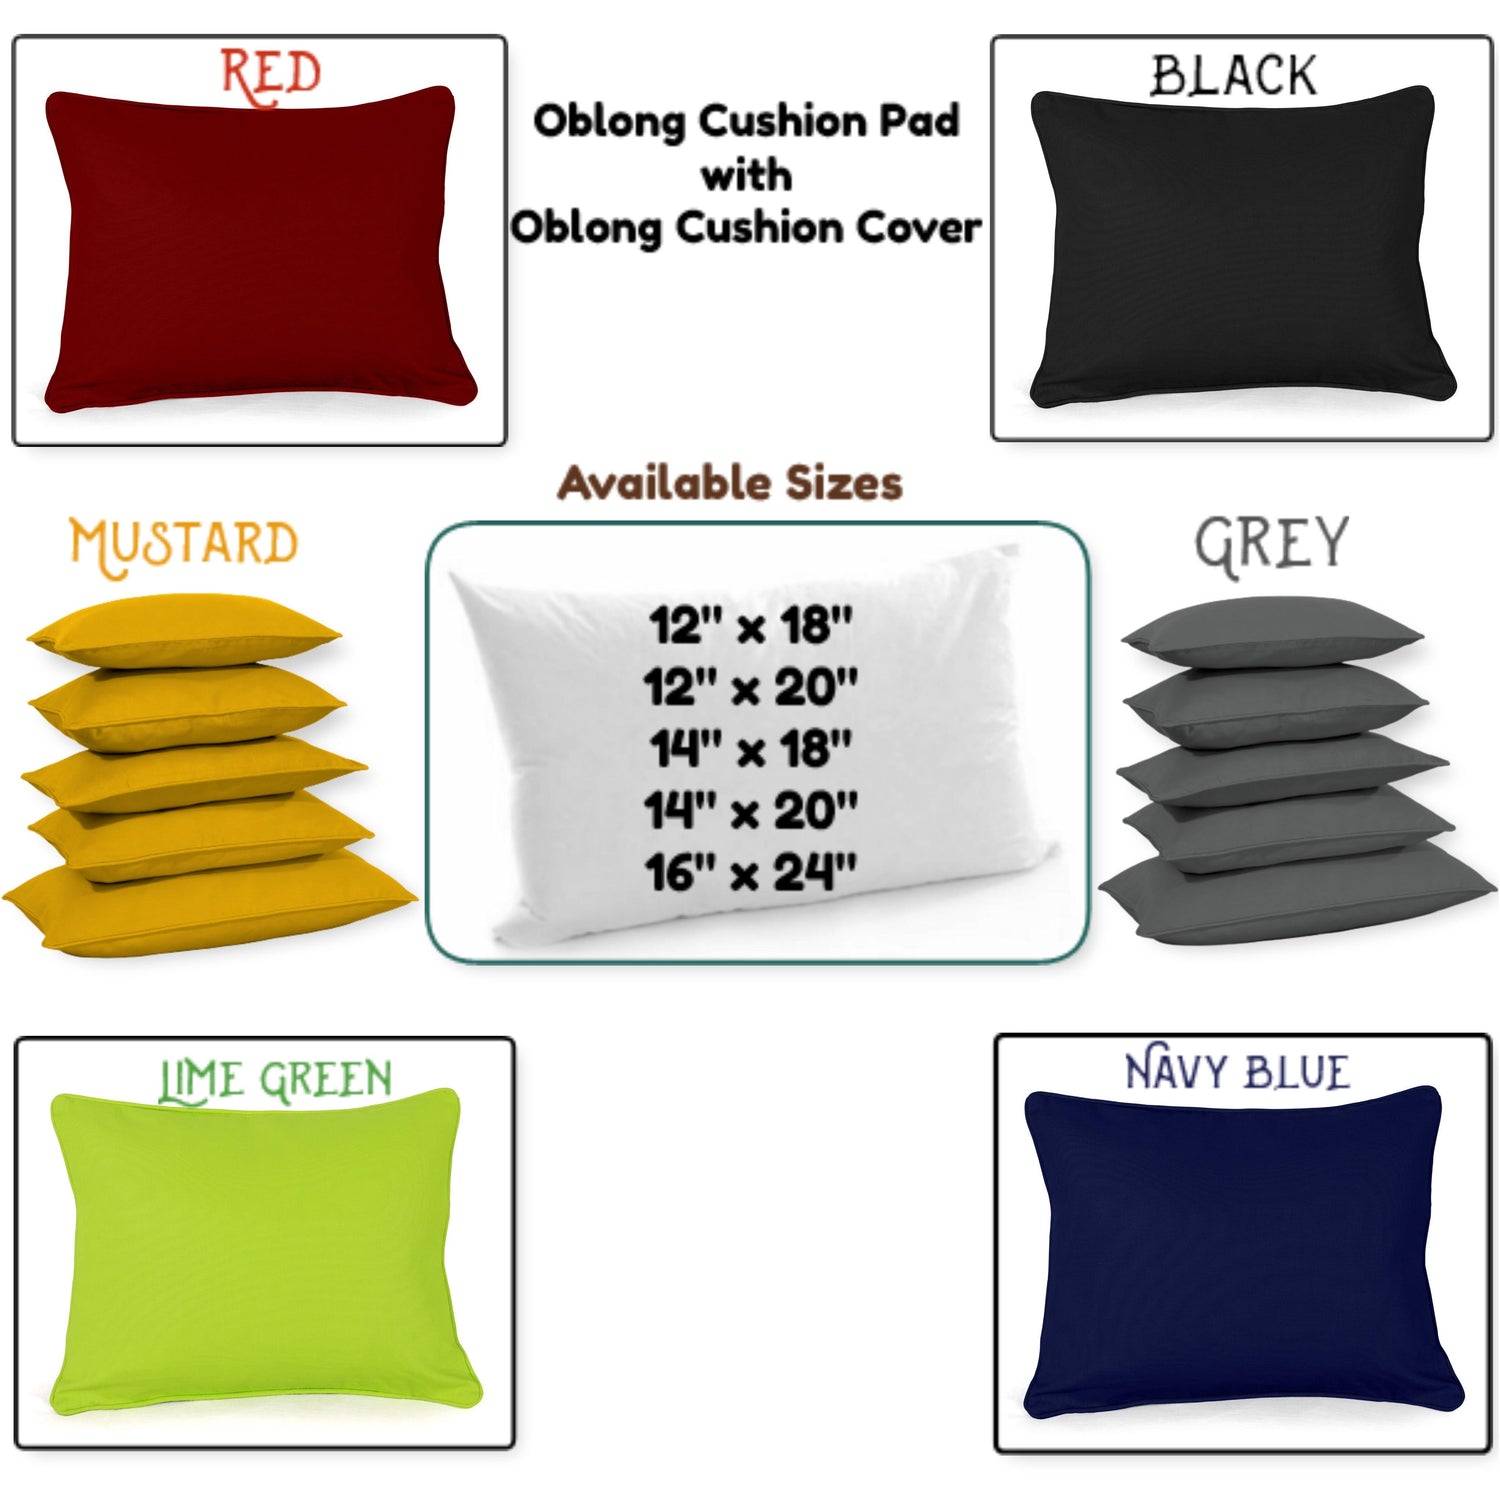 Oblong Cushion Pads - Arlinens